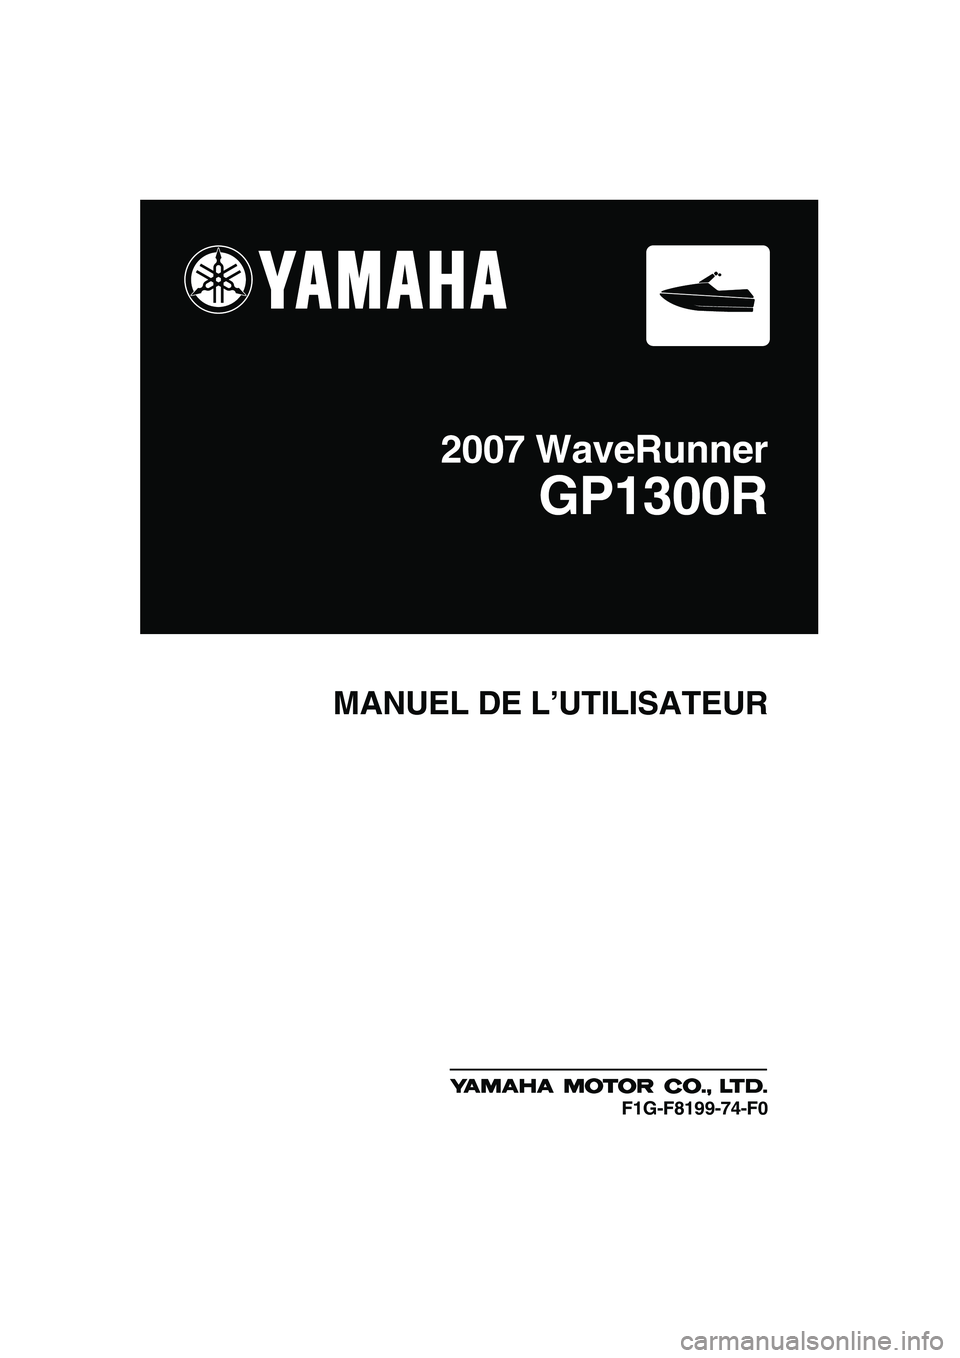 YAMAHA GP1300R 2007  Notices Demploi (in French) MANUEL DE L’UTILISATEUR
2007 WaveRunner
GP1300R
F1G-F8199-74-F0
UF1G74F0.book  Page 1  Monday, July 31, 2006  9:47 AM 